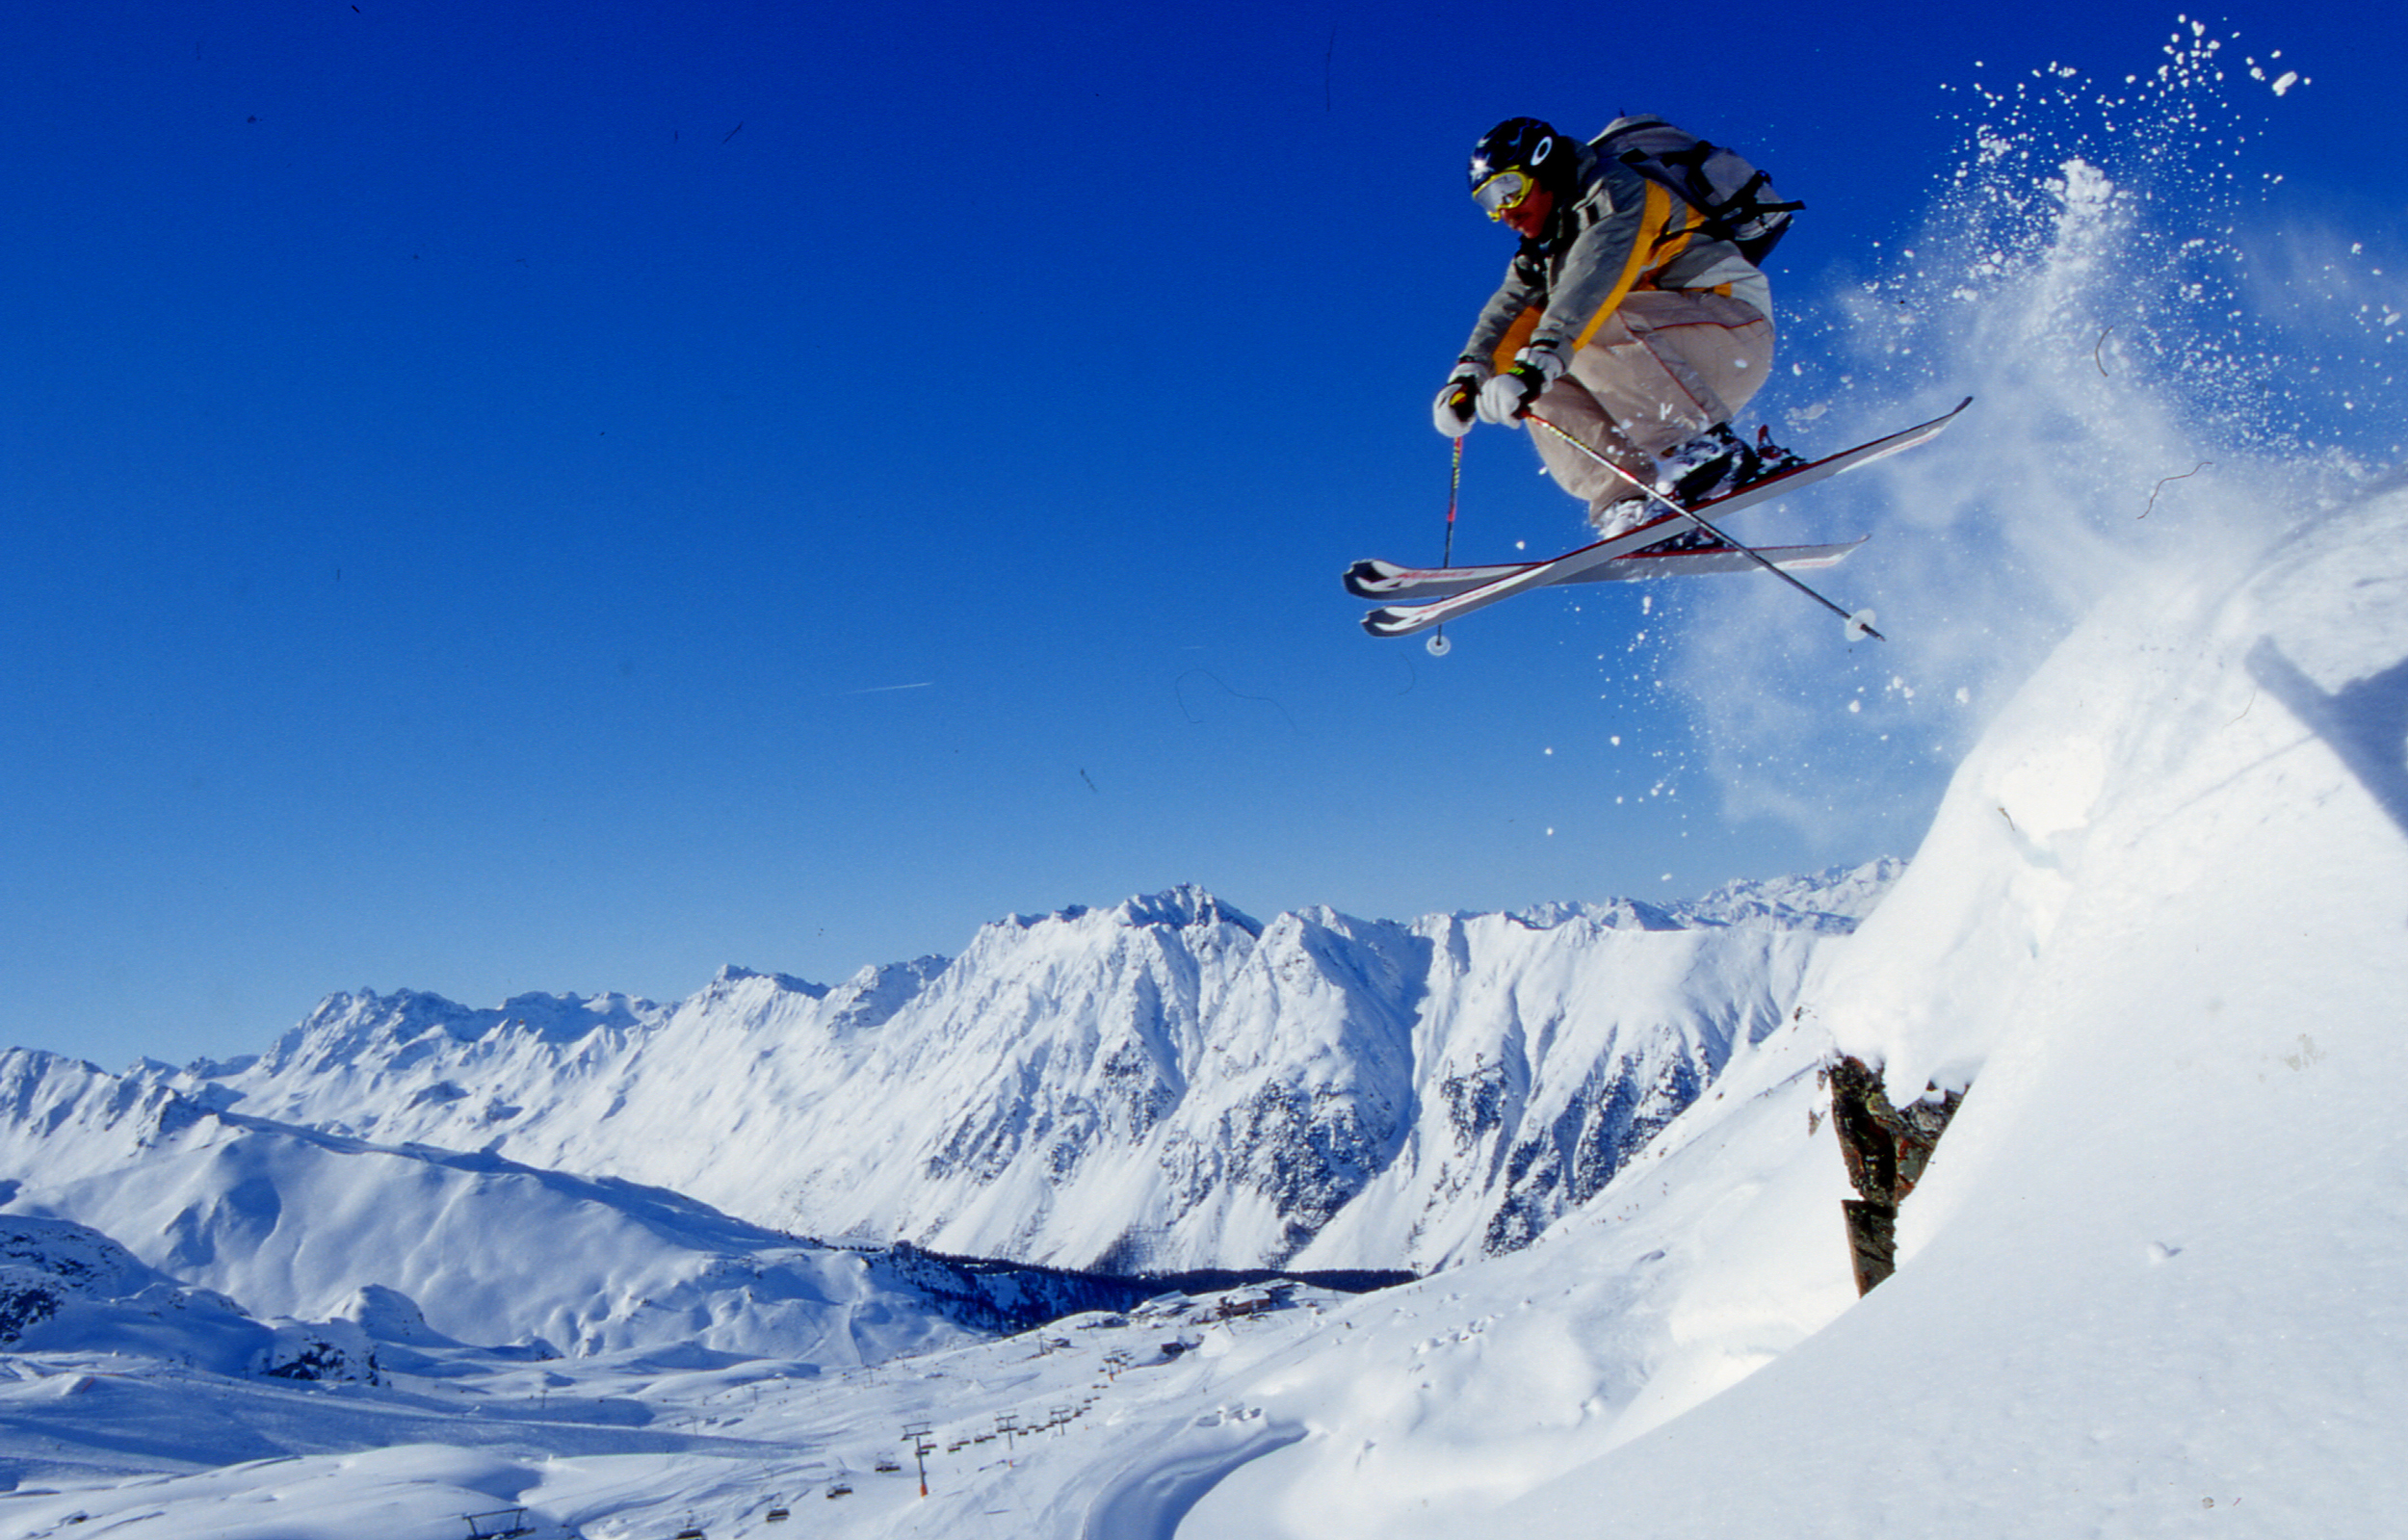 Skiing pictures. Горнолыжный спорт. Горные лыжи. Горные лыжи спорт. Горнолыжный спуск.